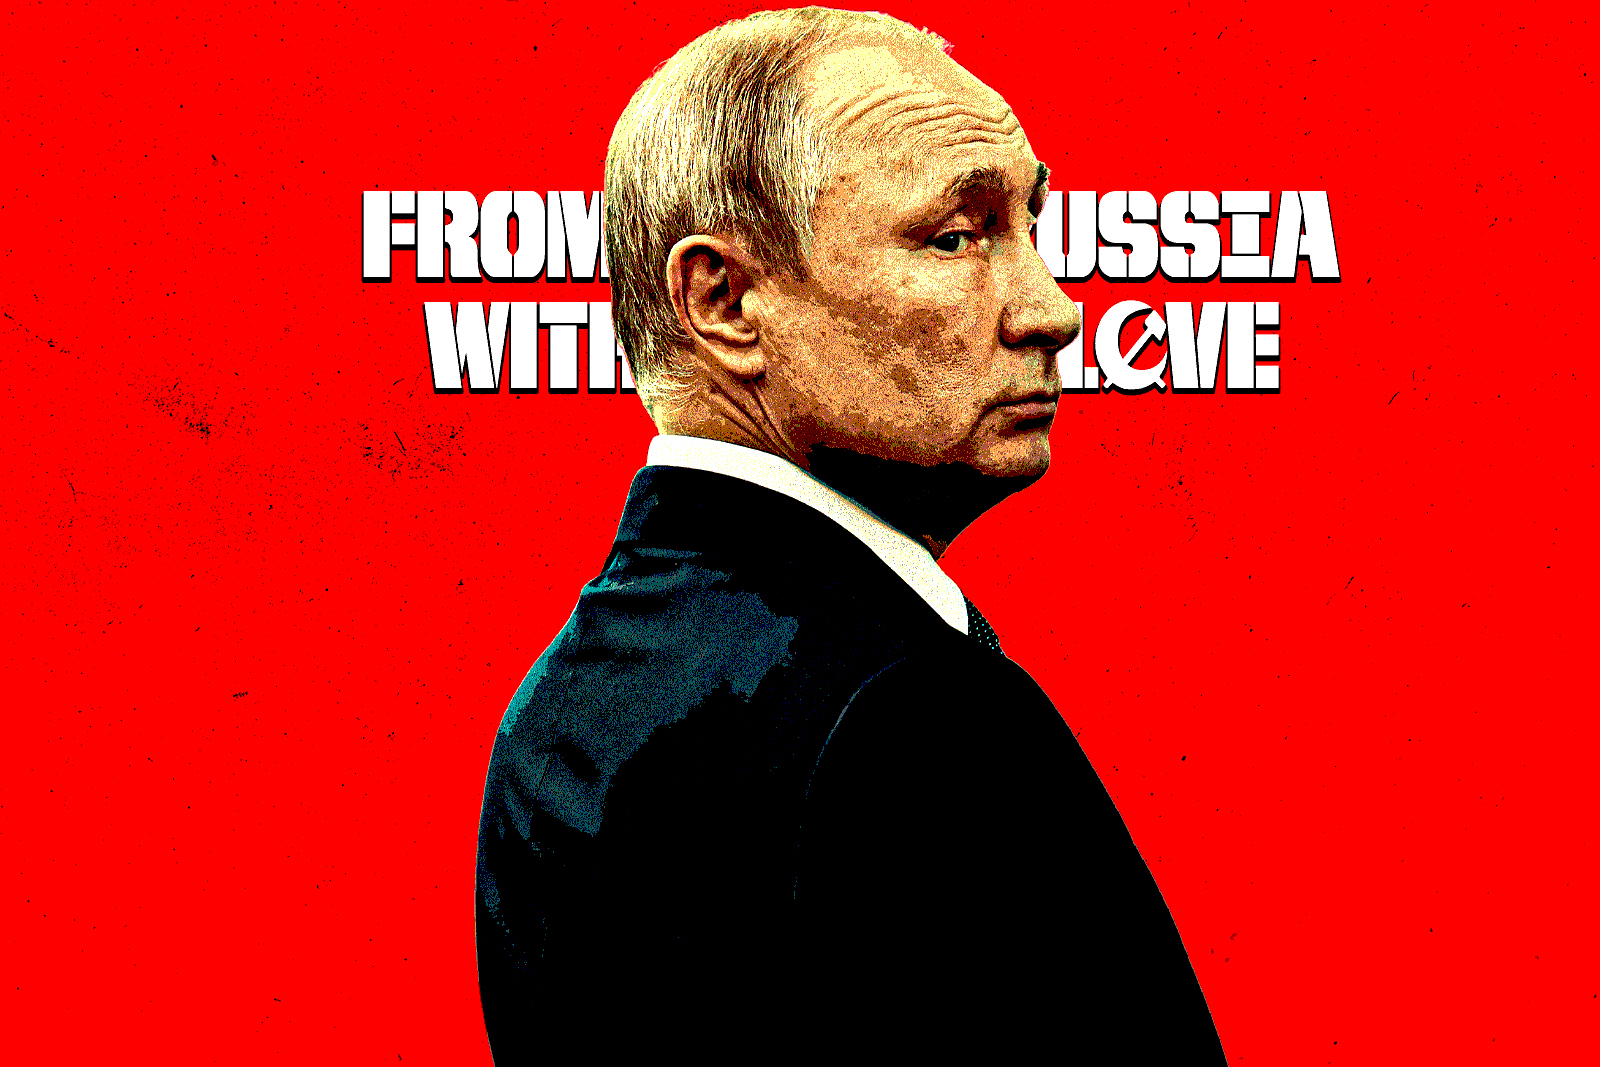 Vladimir Putin Bond Villain